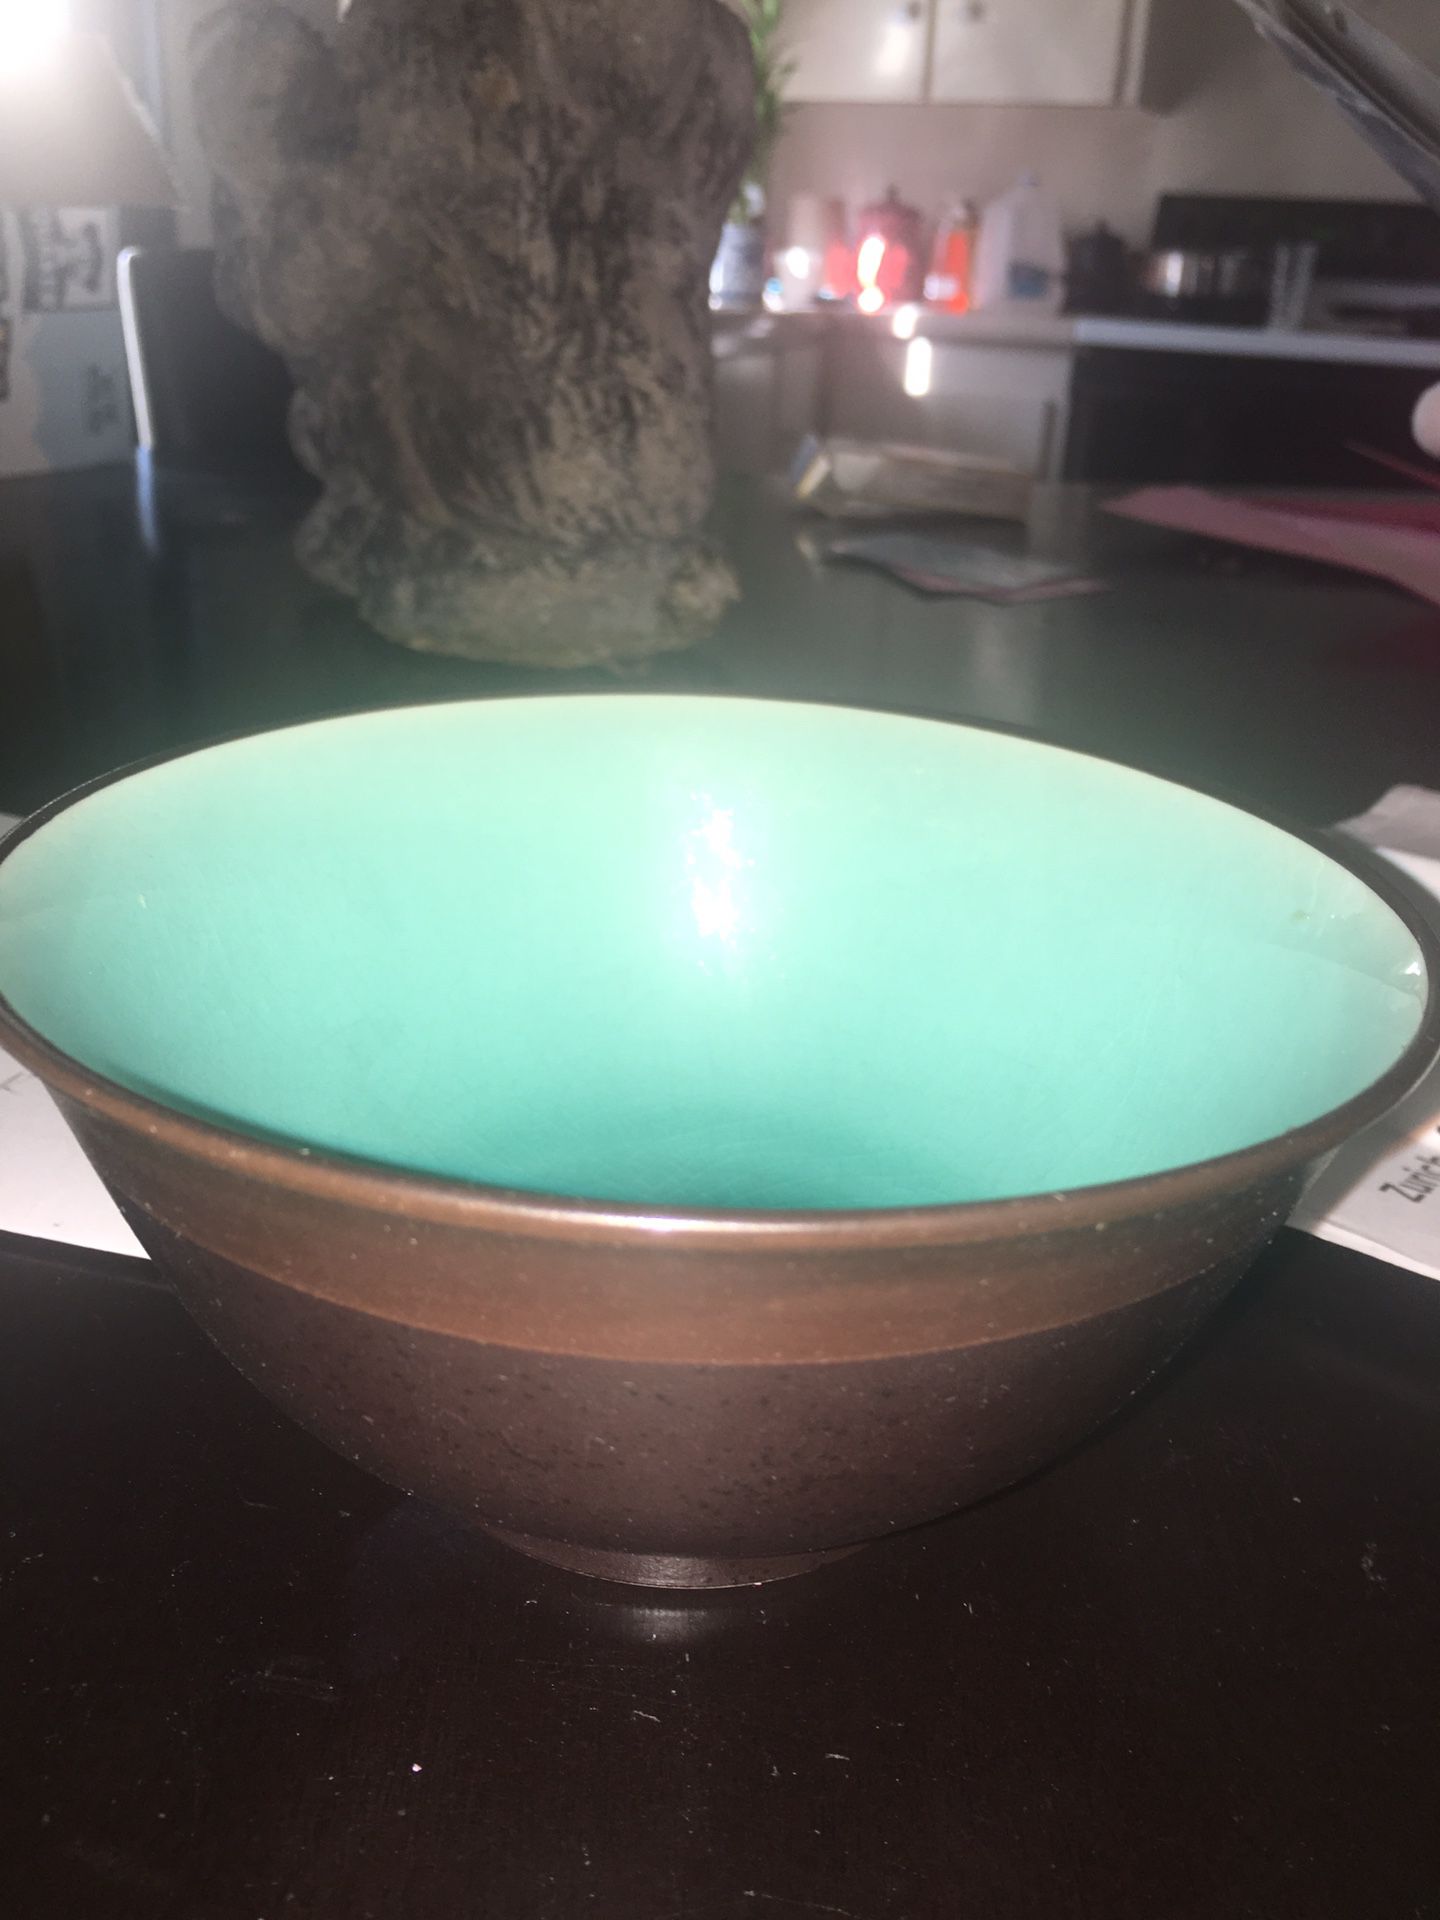 Chinese bowl